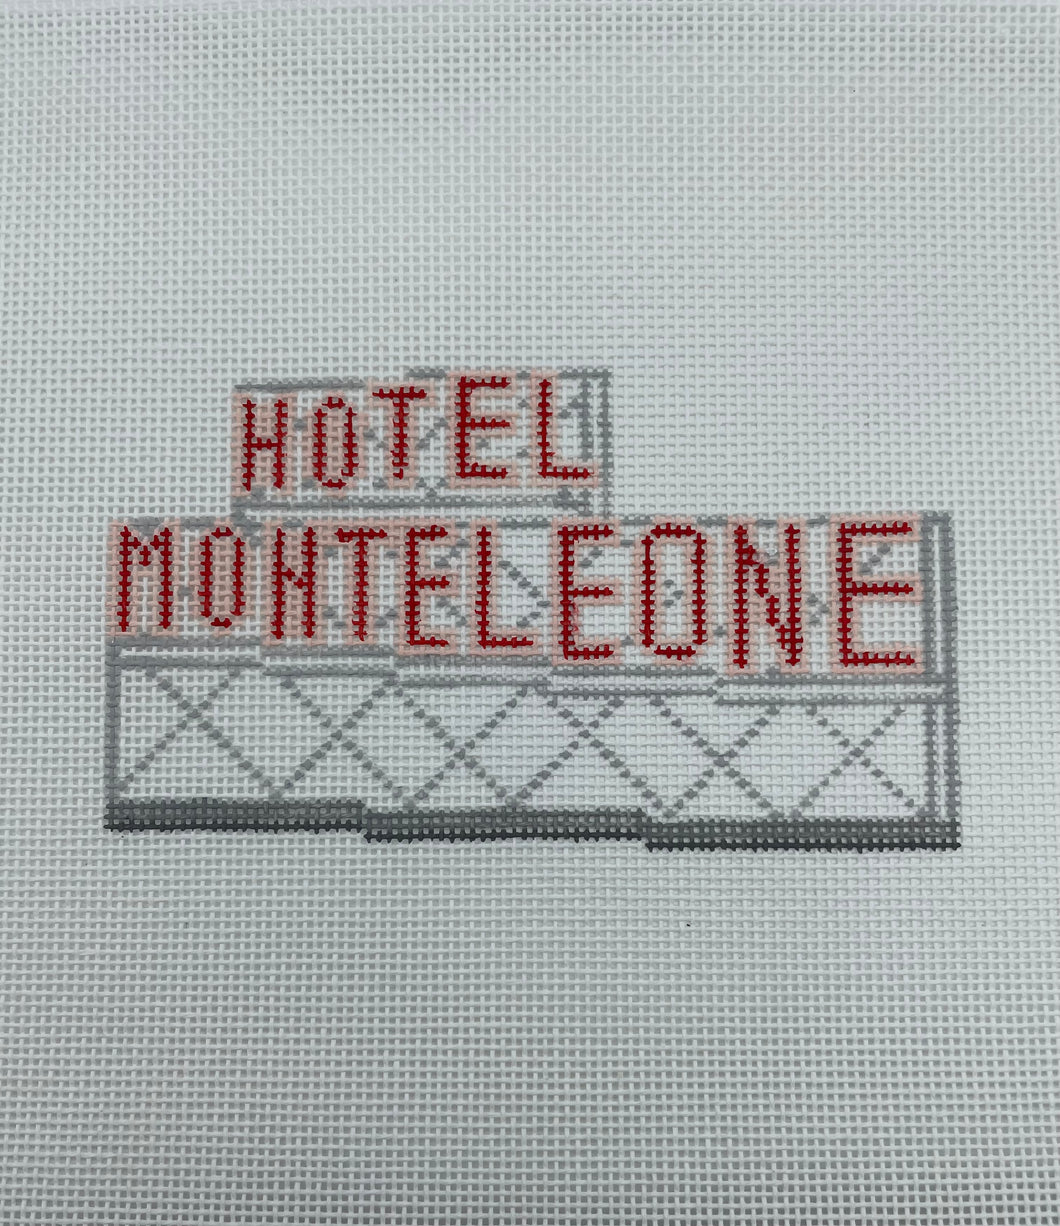 Hotel Monteleone Needlepoint Ornament